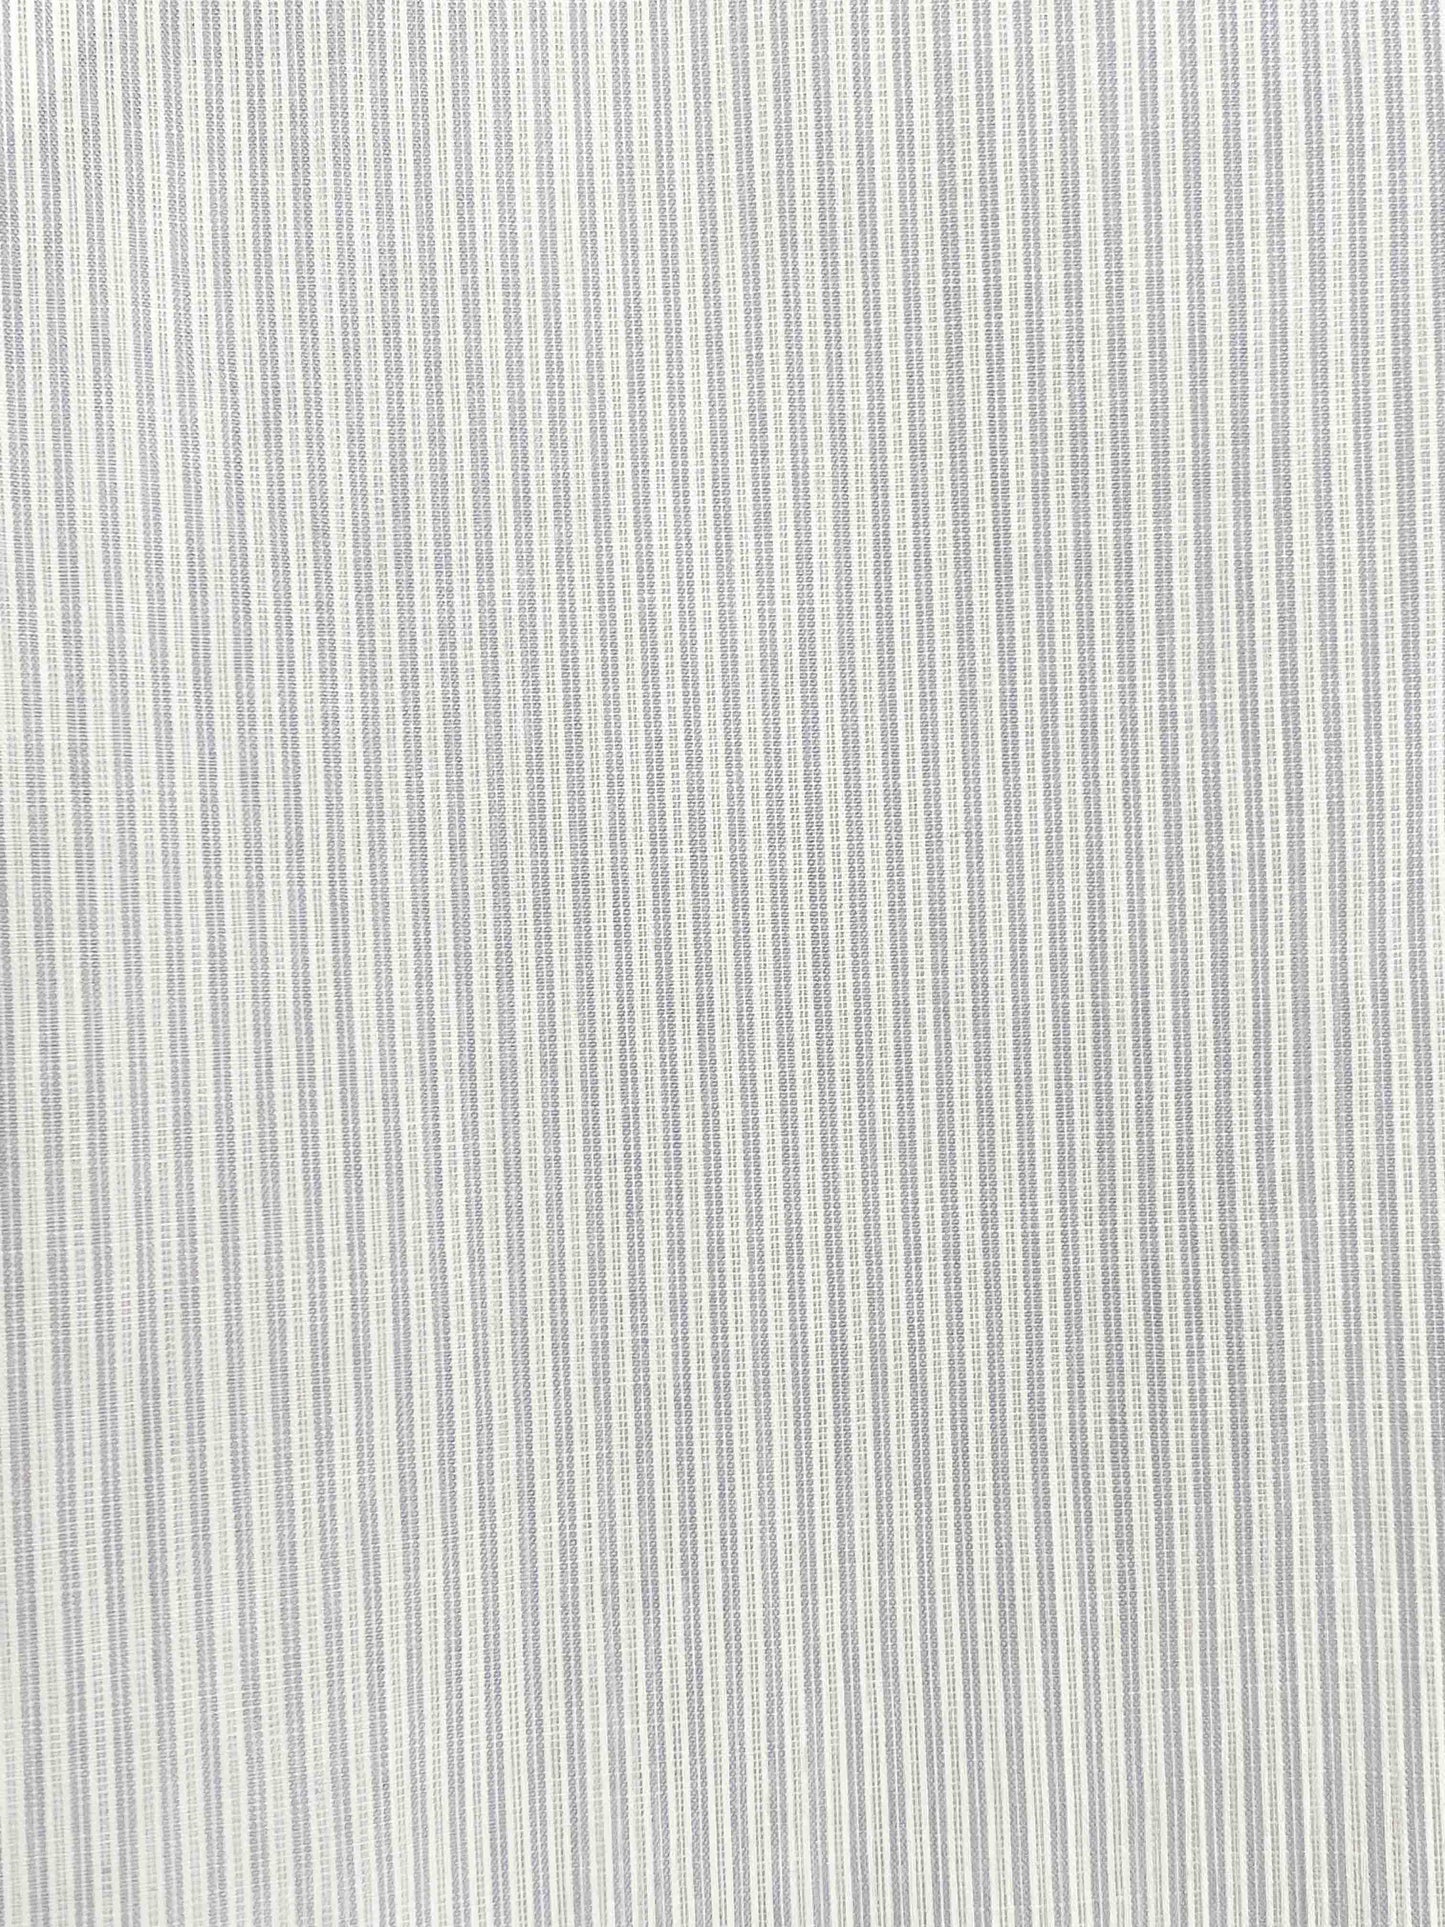 Close up of Capped Sleeve Dress - Dream Stripe fabric by Deiji Studios